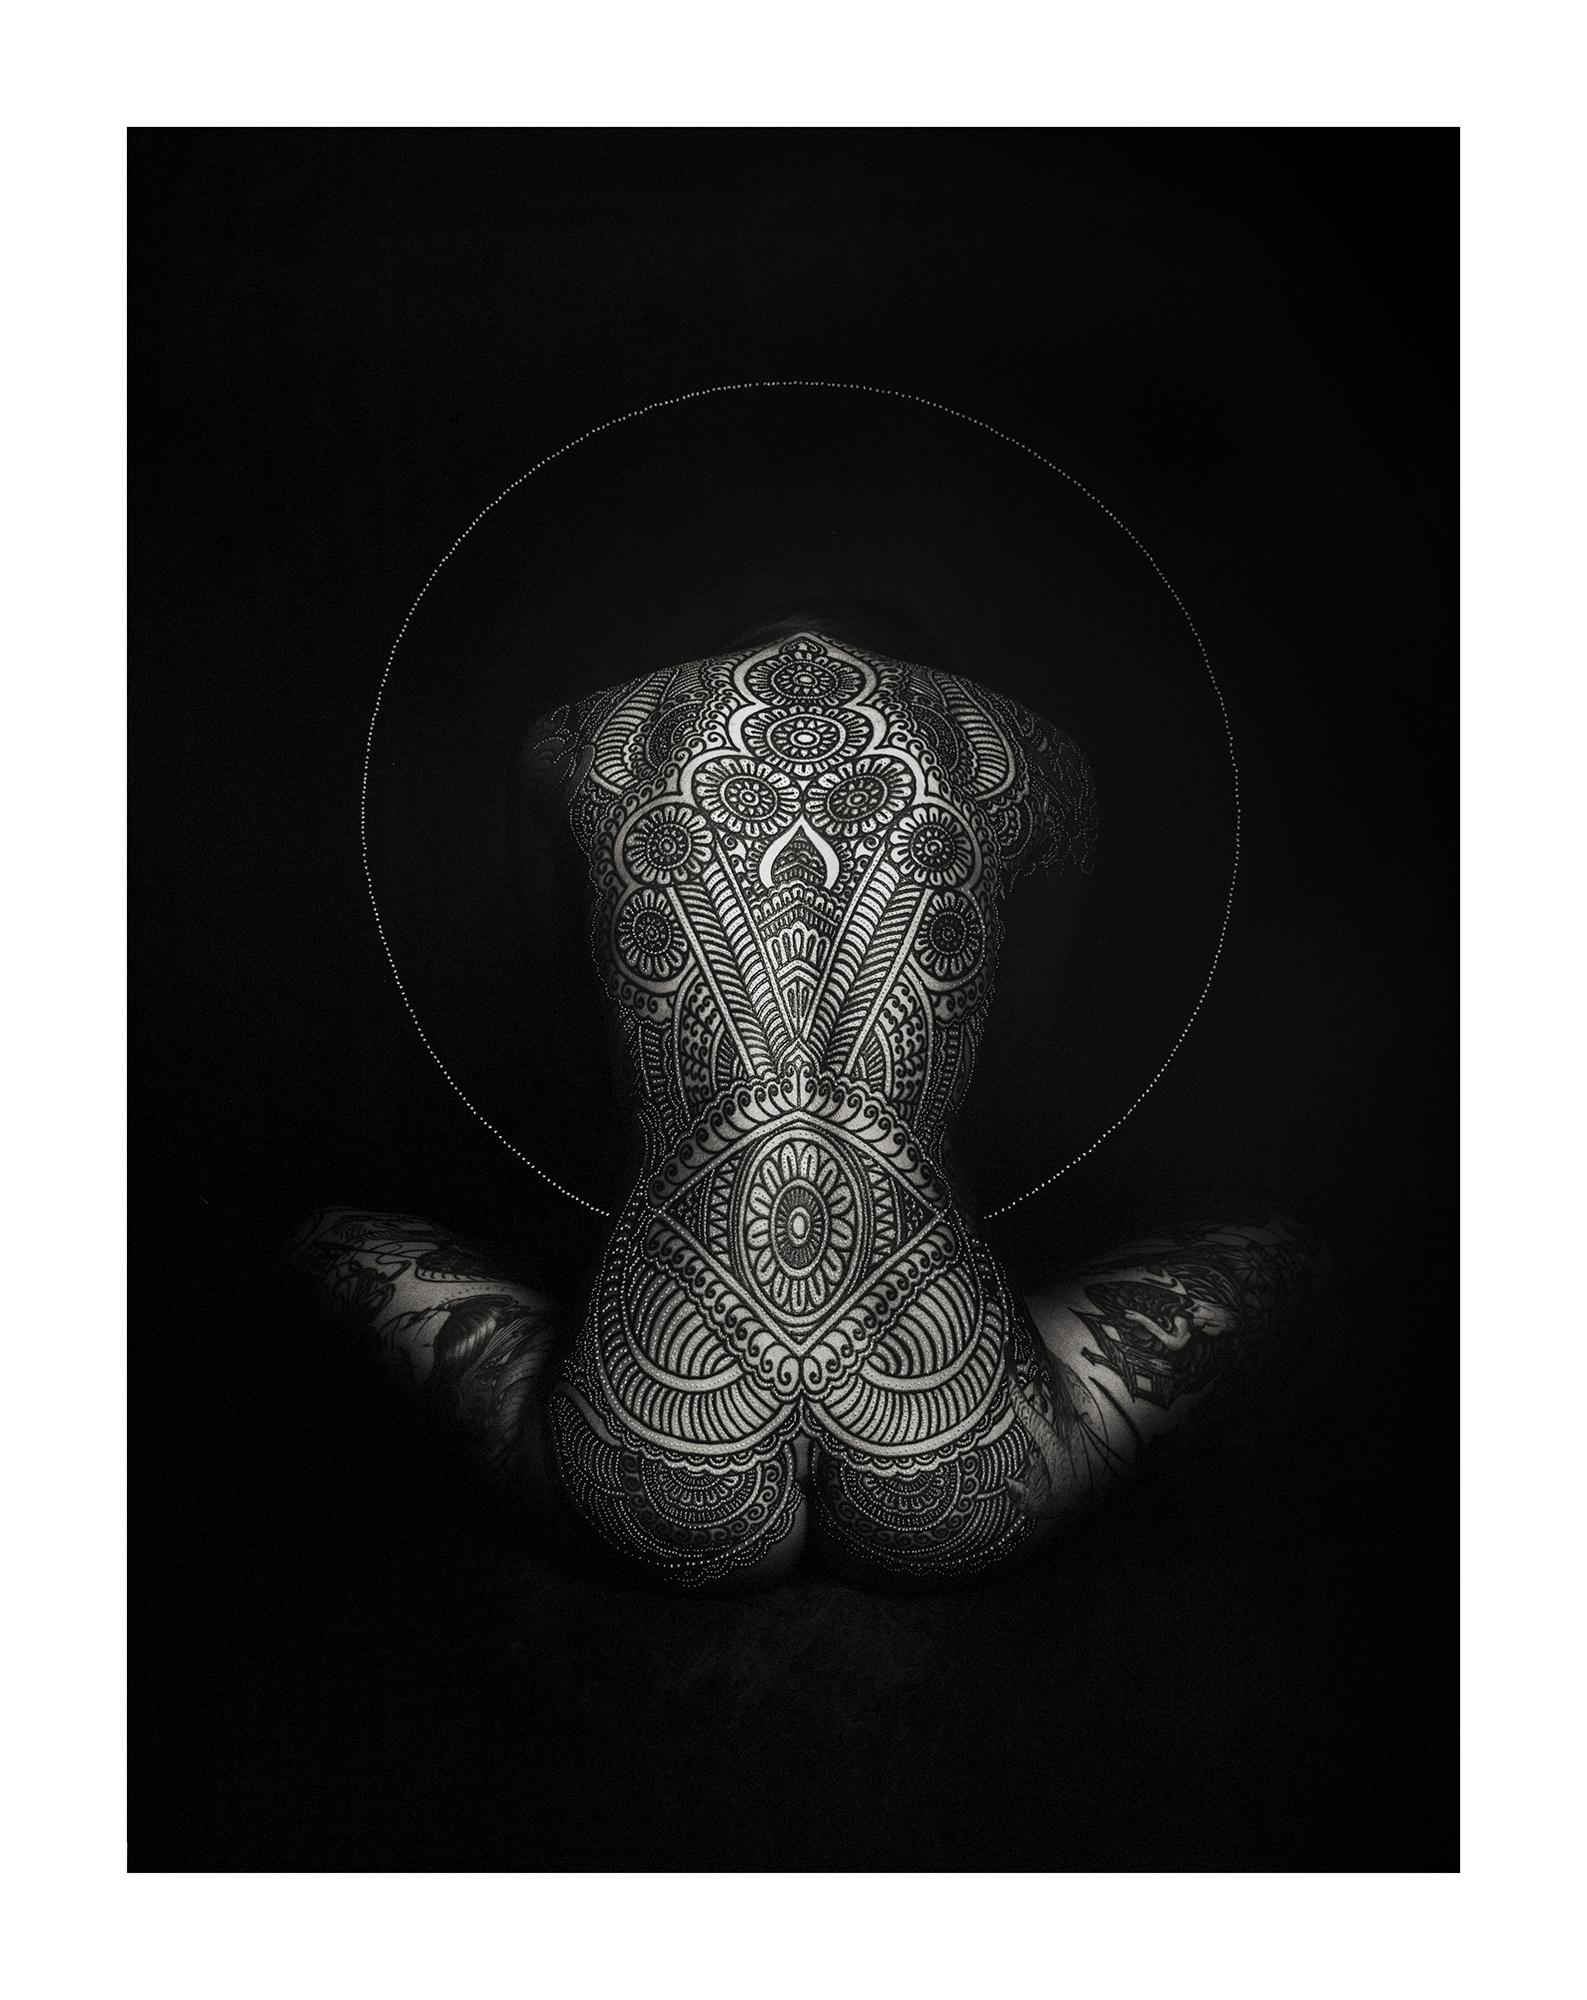 Reka Nyari Black and White Photograph - L'ARTISTE